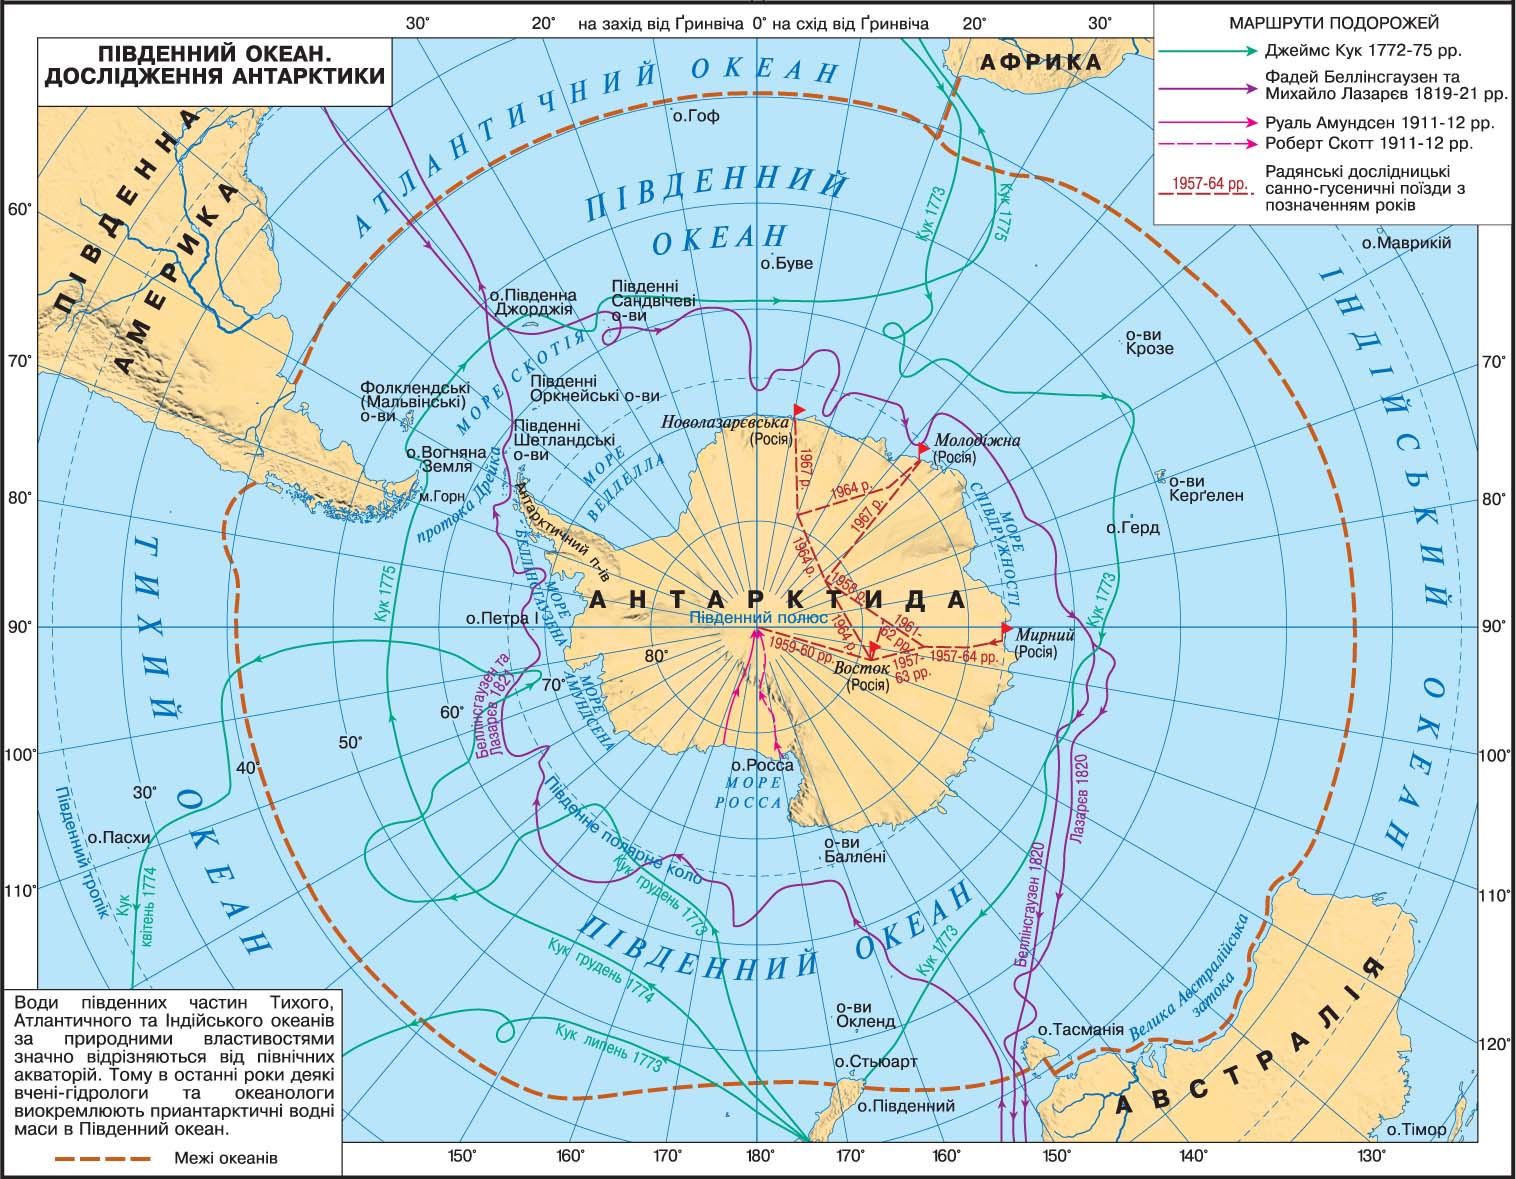 Древние платформы антарктиды. Показать на карте Северный Ледовитый океан и Антарктиду. Море Беллинсгаузена — ; море Амундсена —. Границы Южного океана на карте.